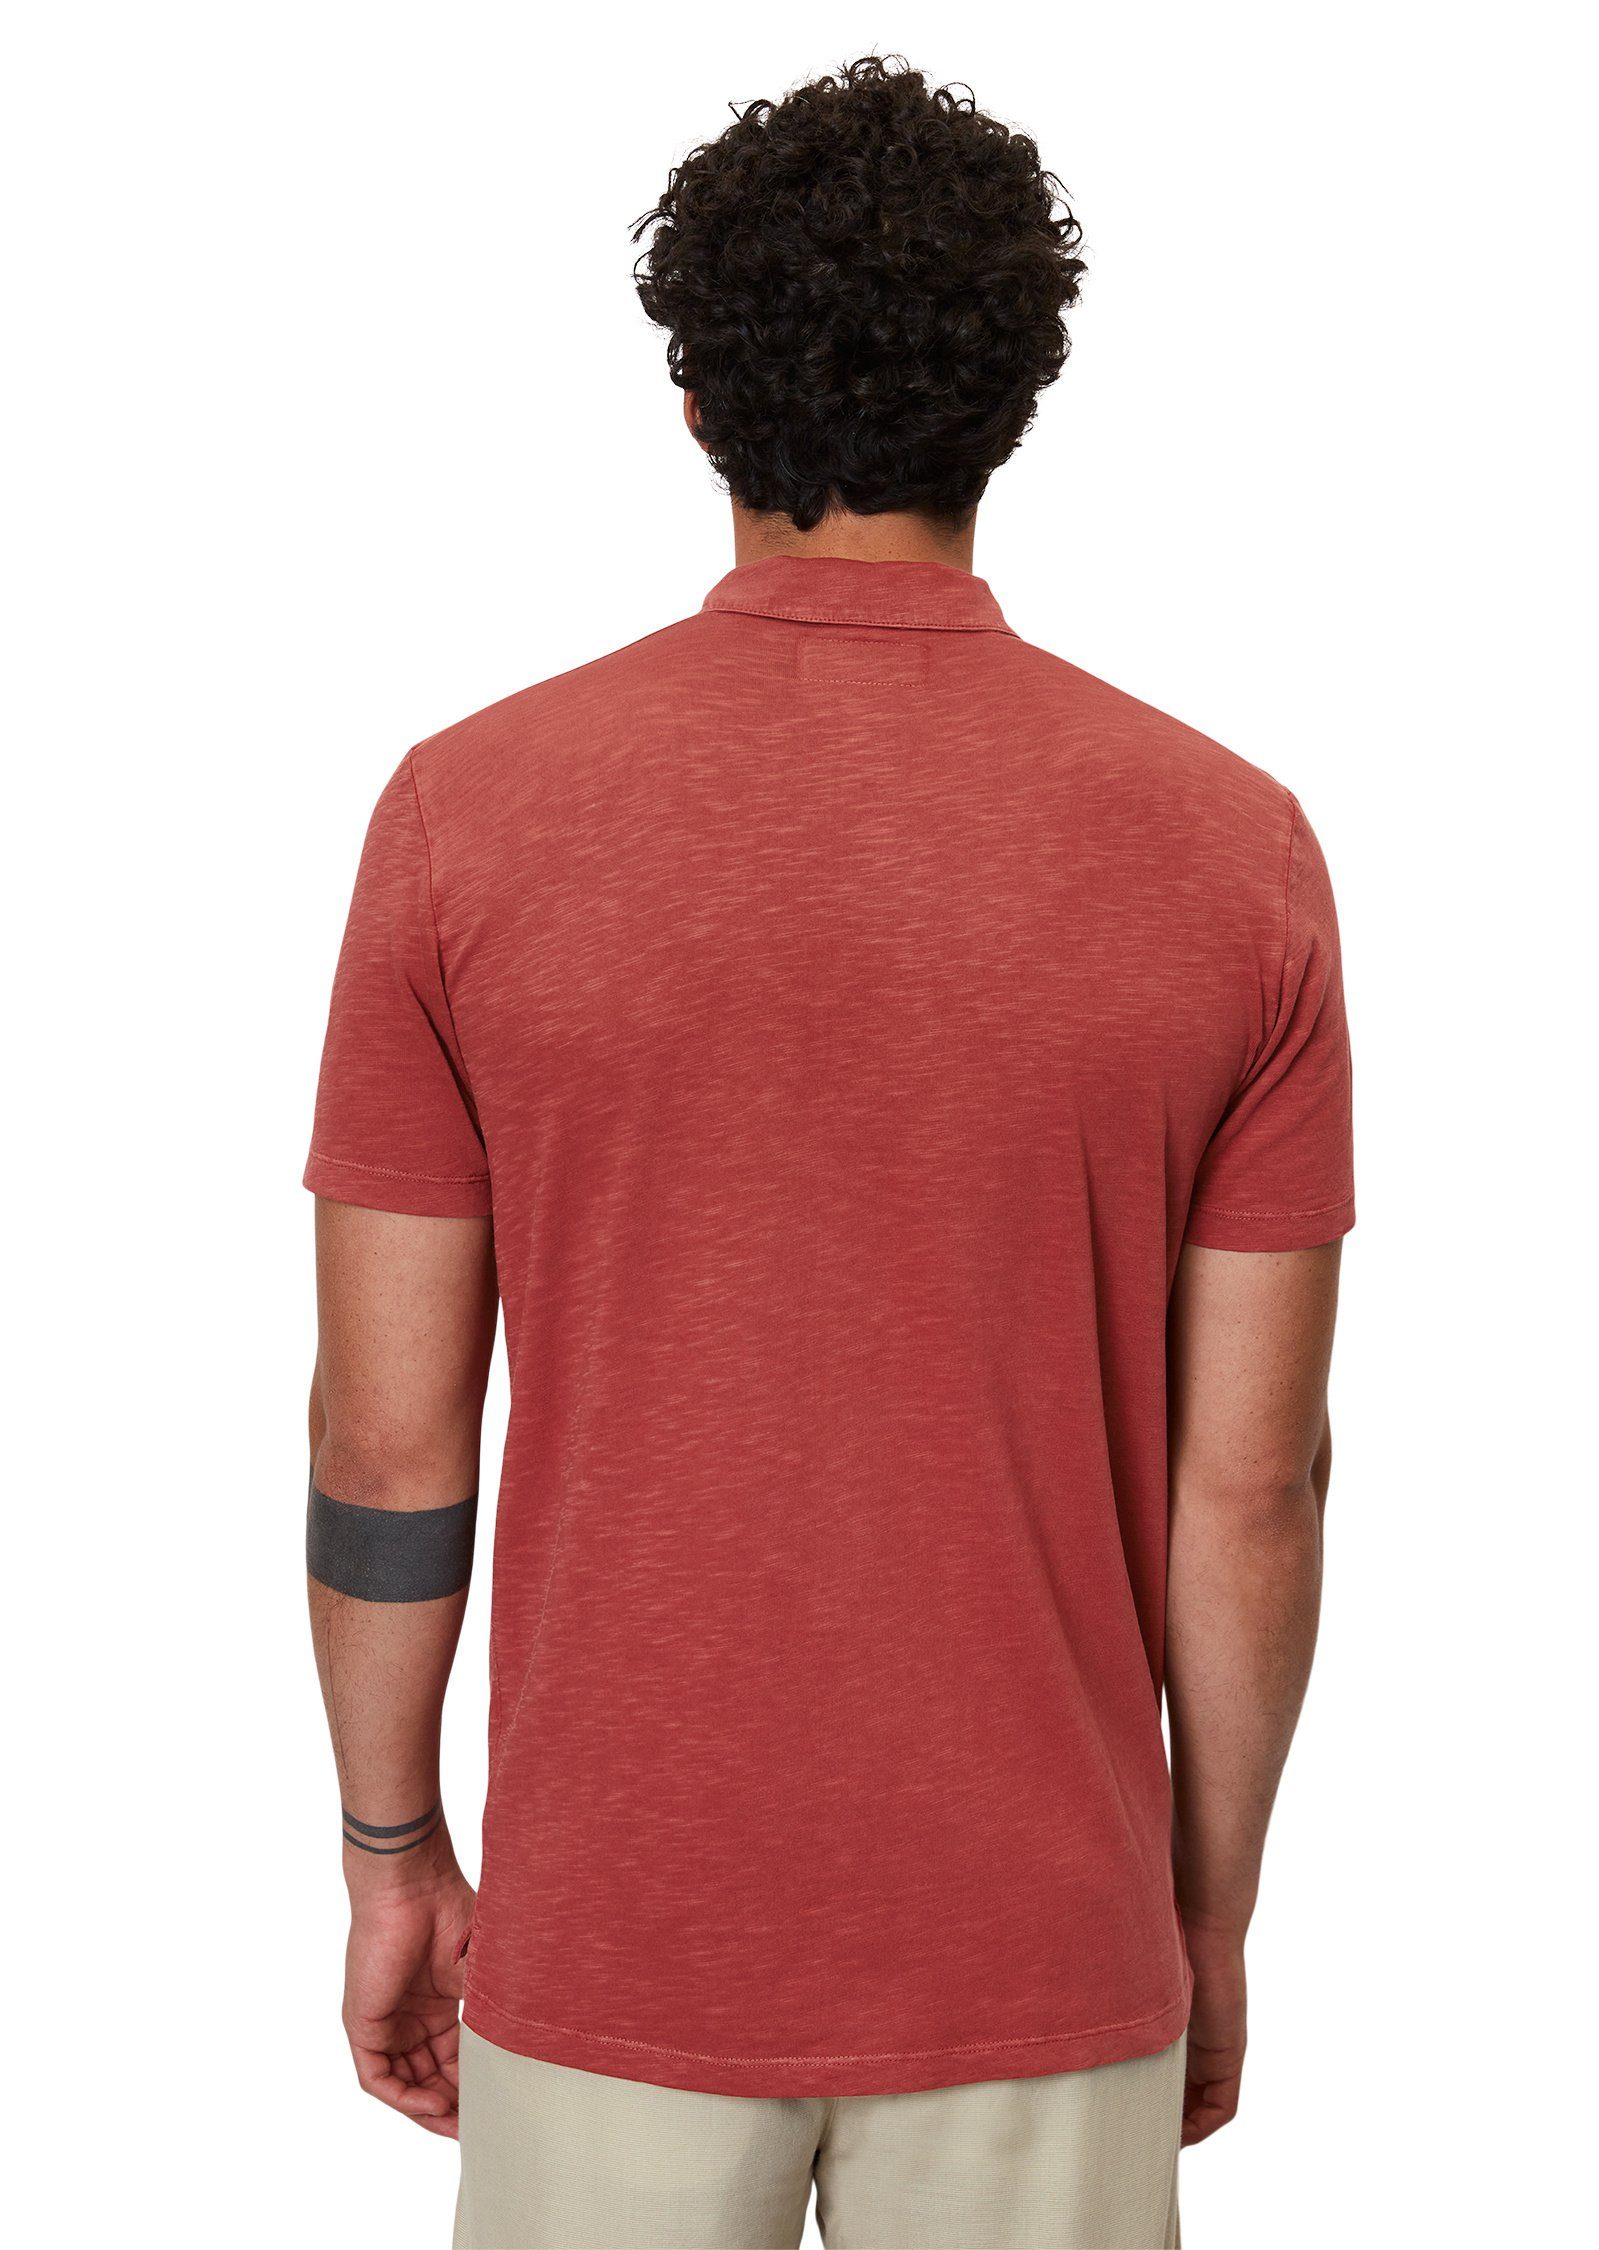 Marc Poloshirt rot hochwertiger Bio-Baumwolle aus O'Polo